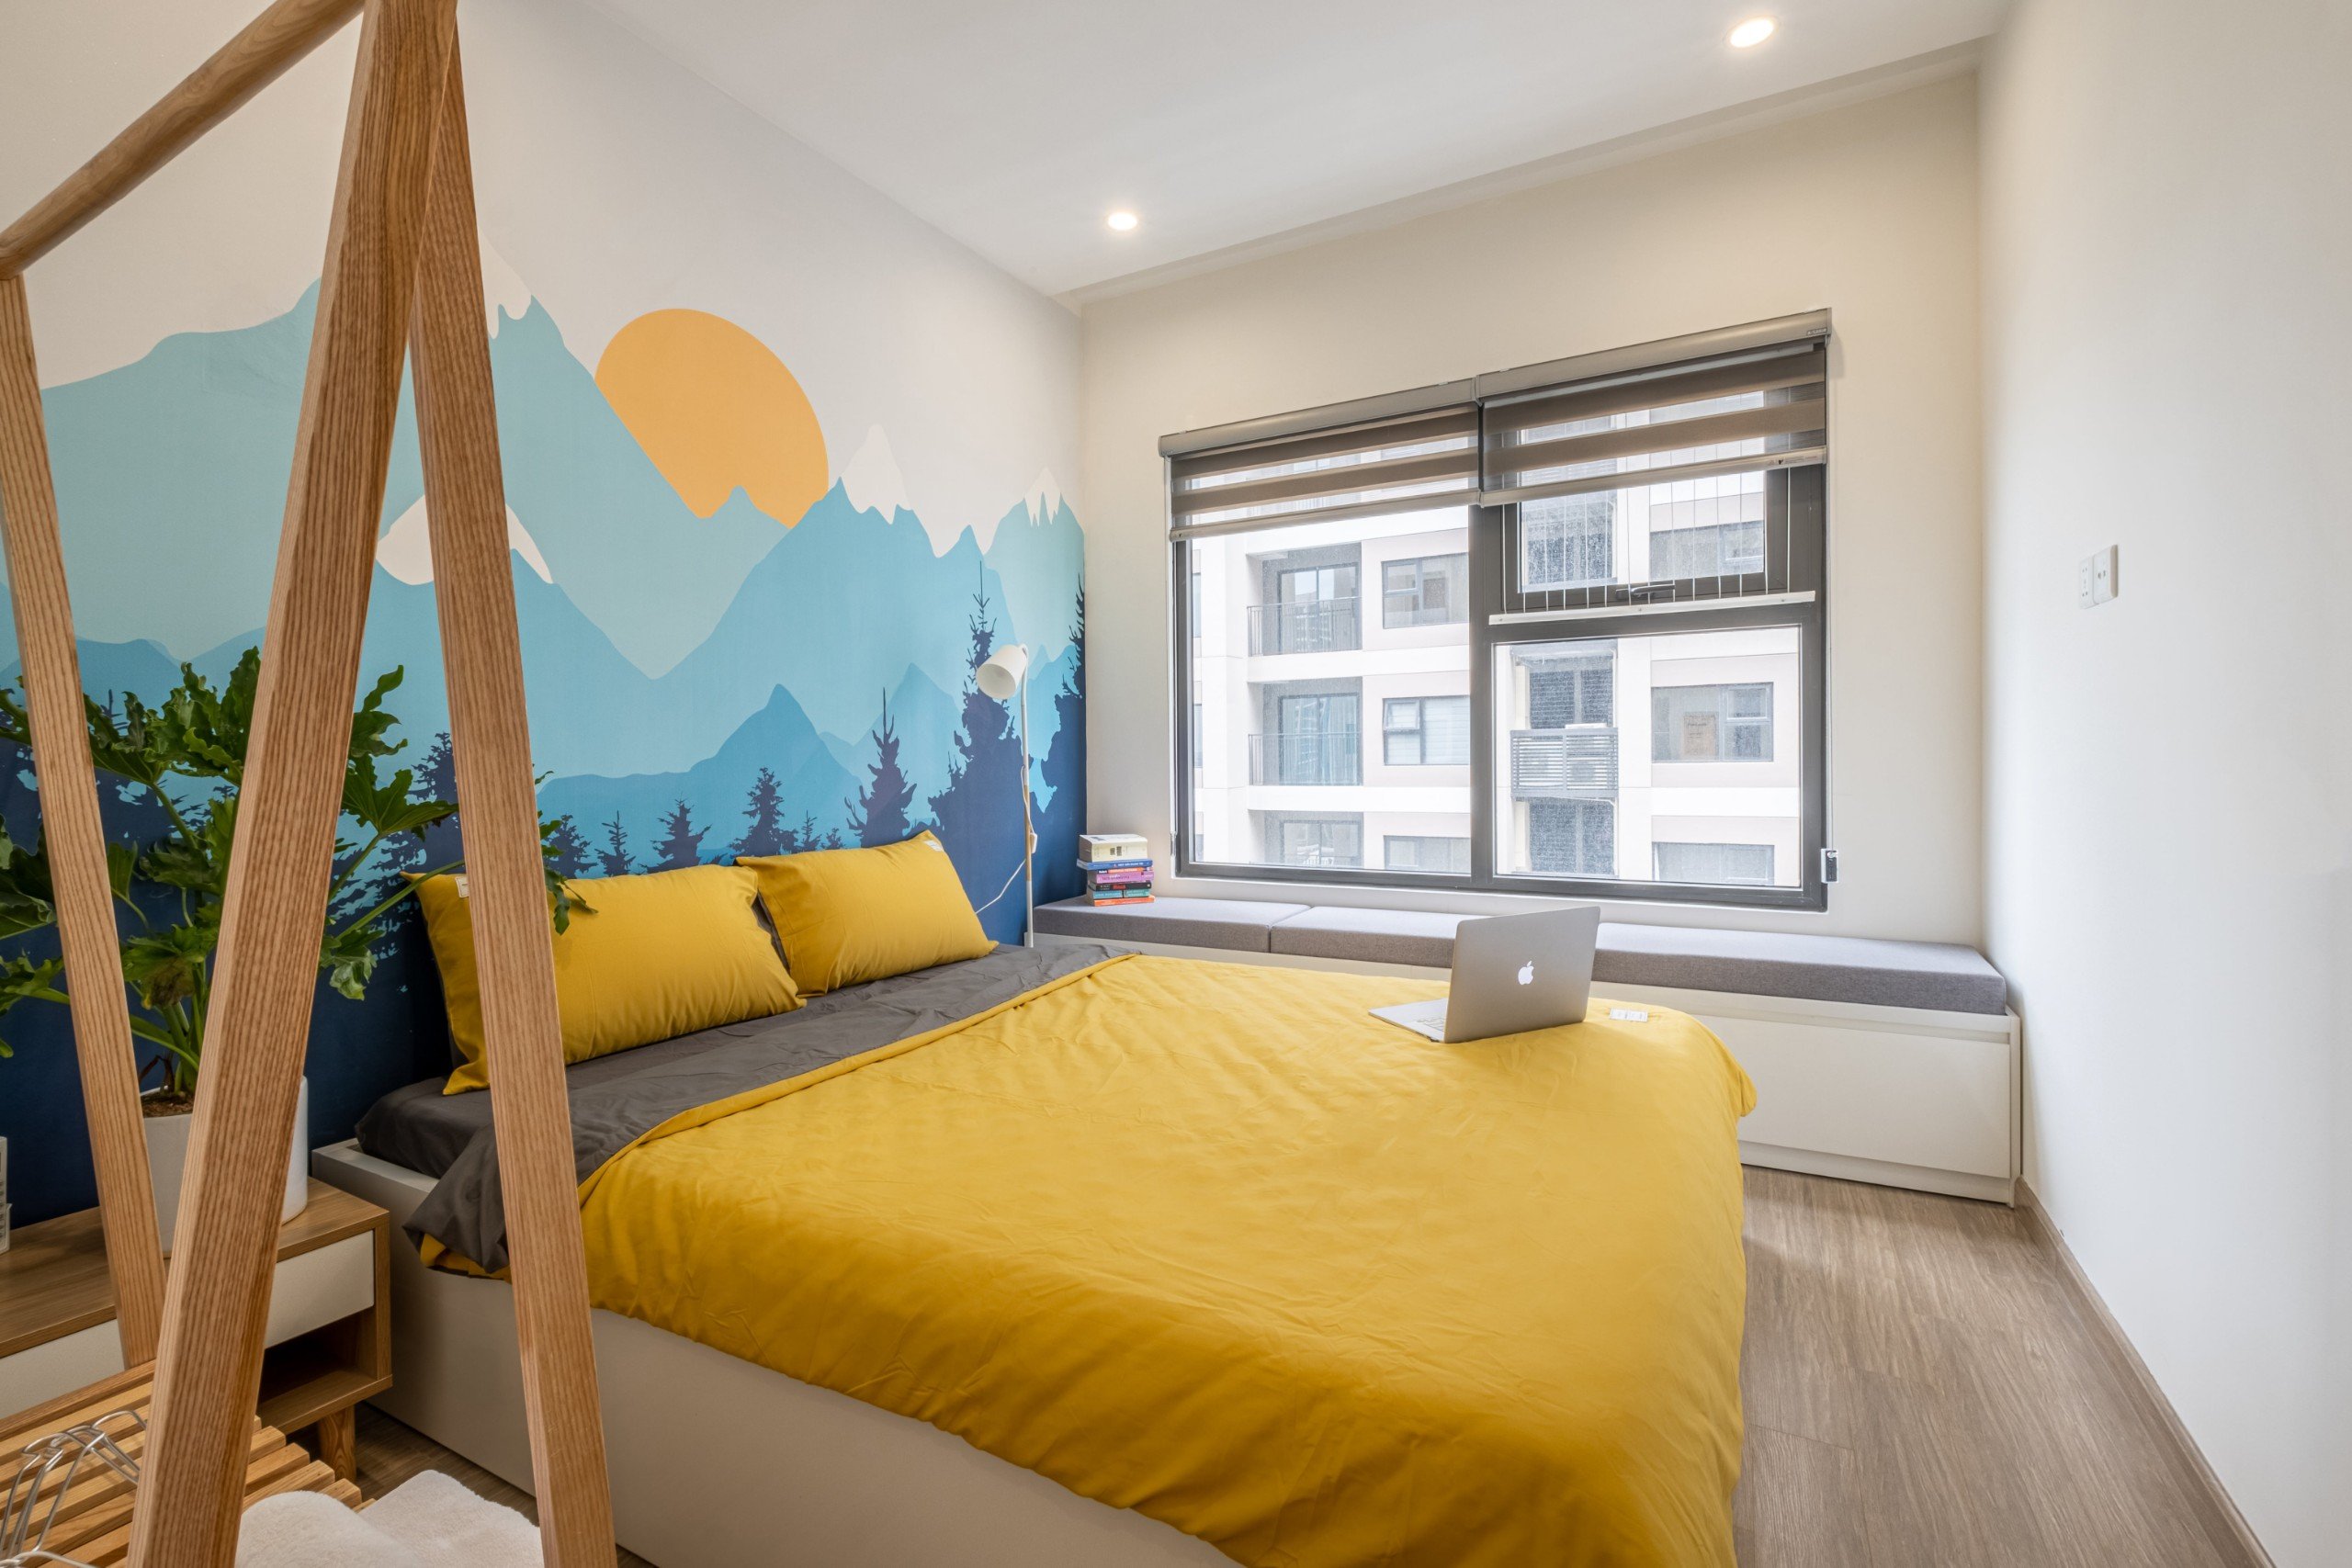 3 bedroom apartment for rent in Vinhomes Ocean Park - good price 8